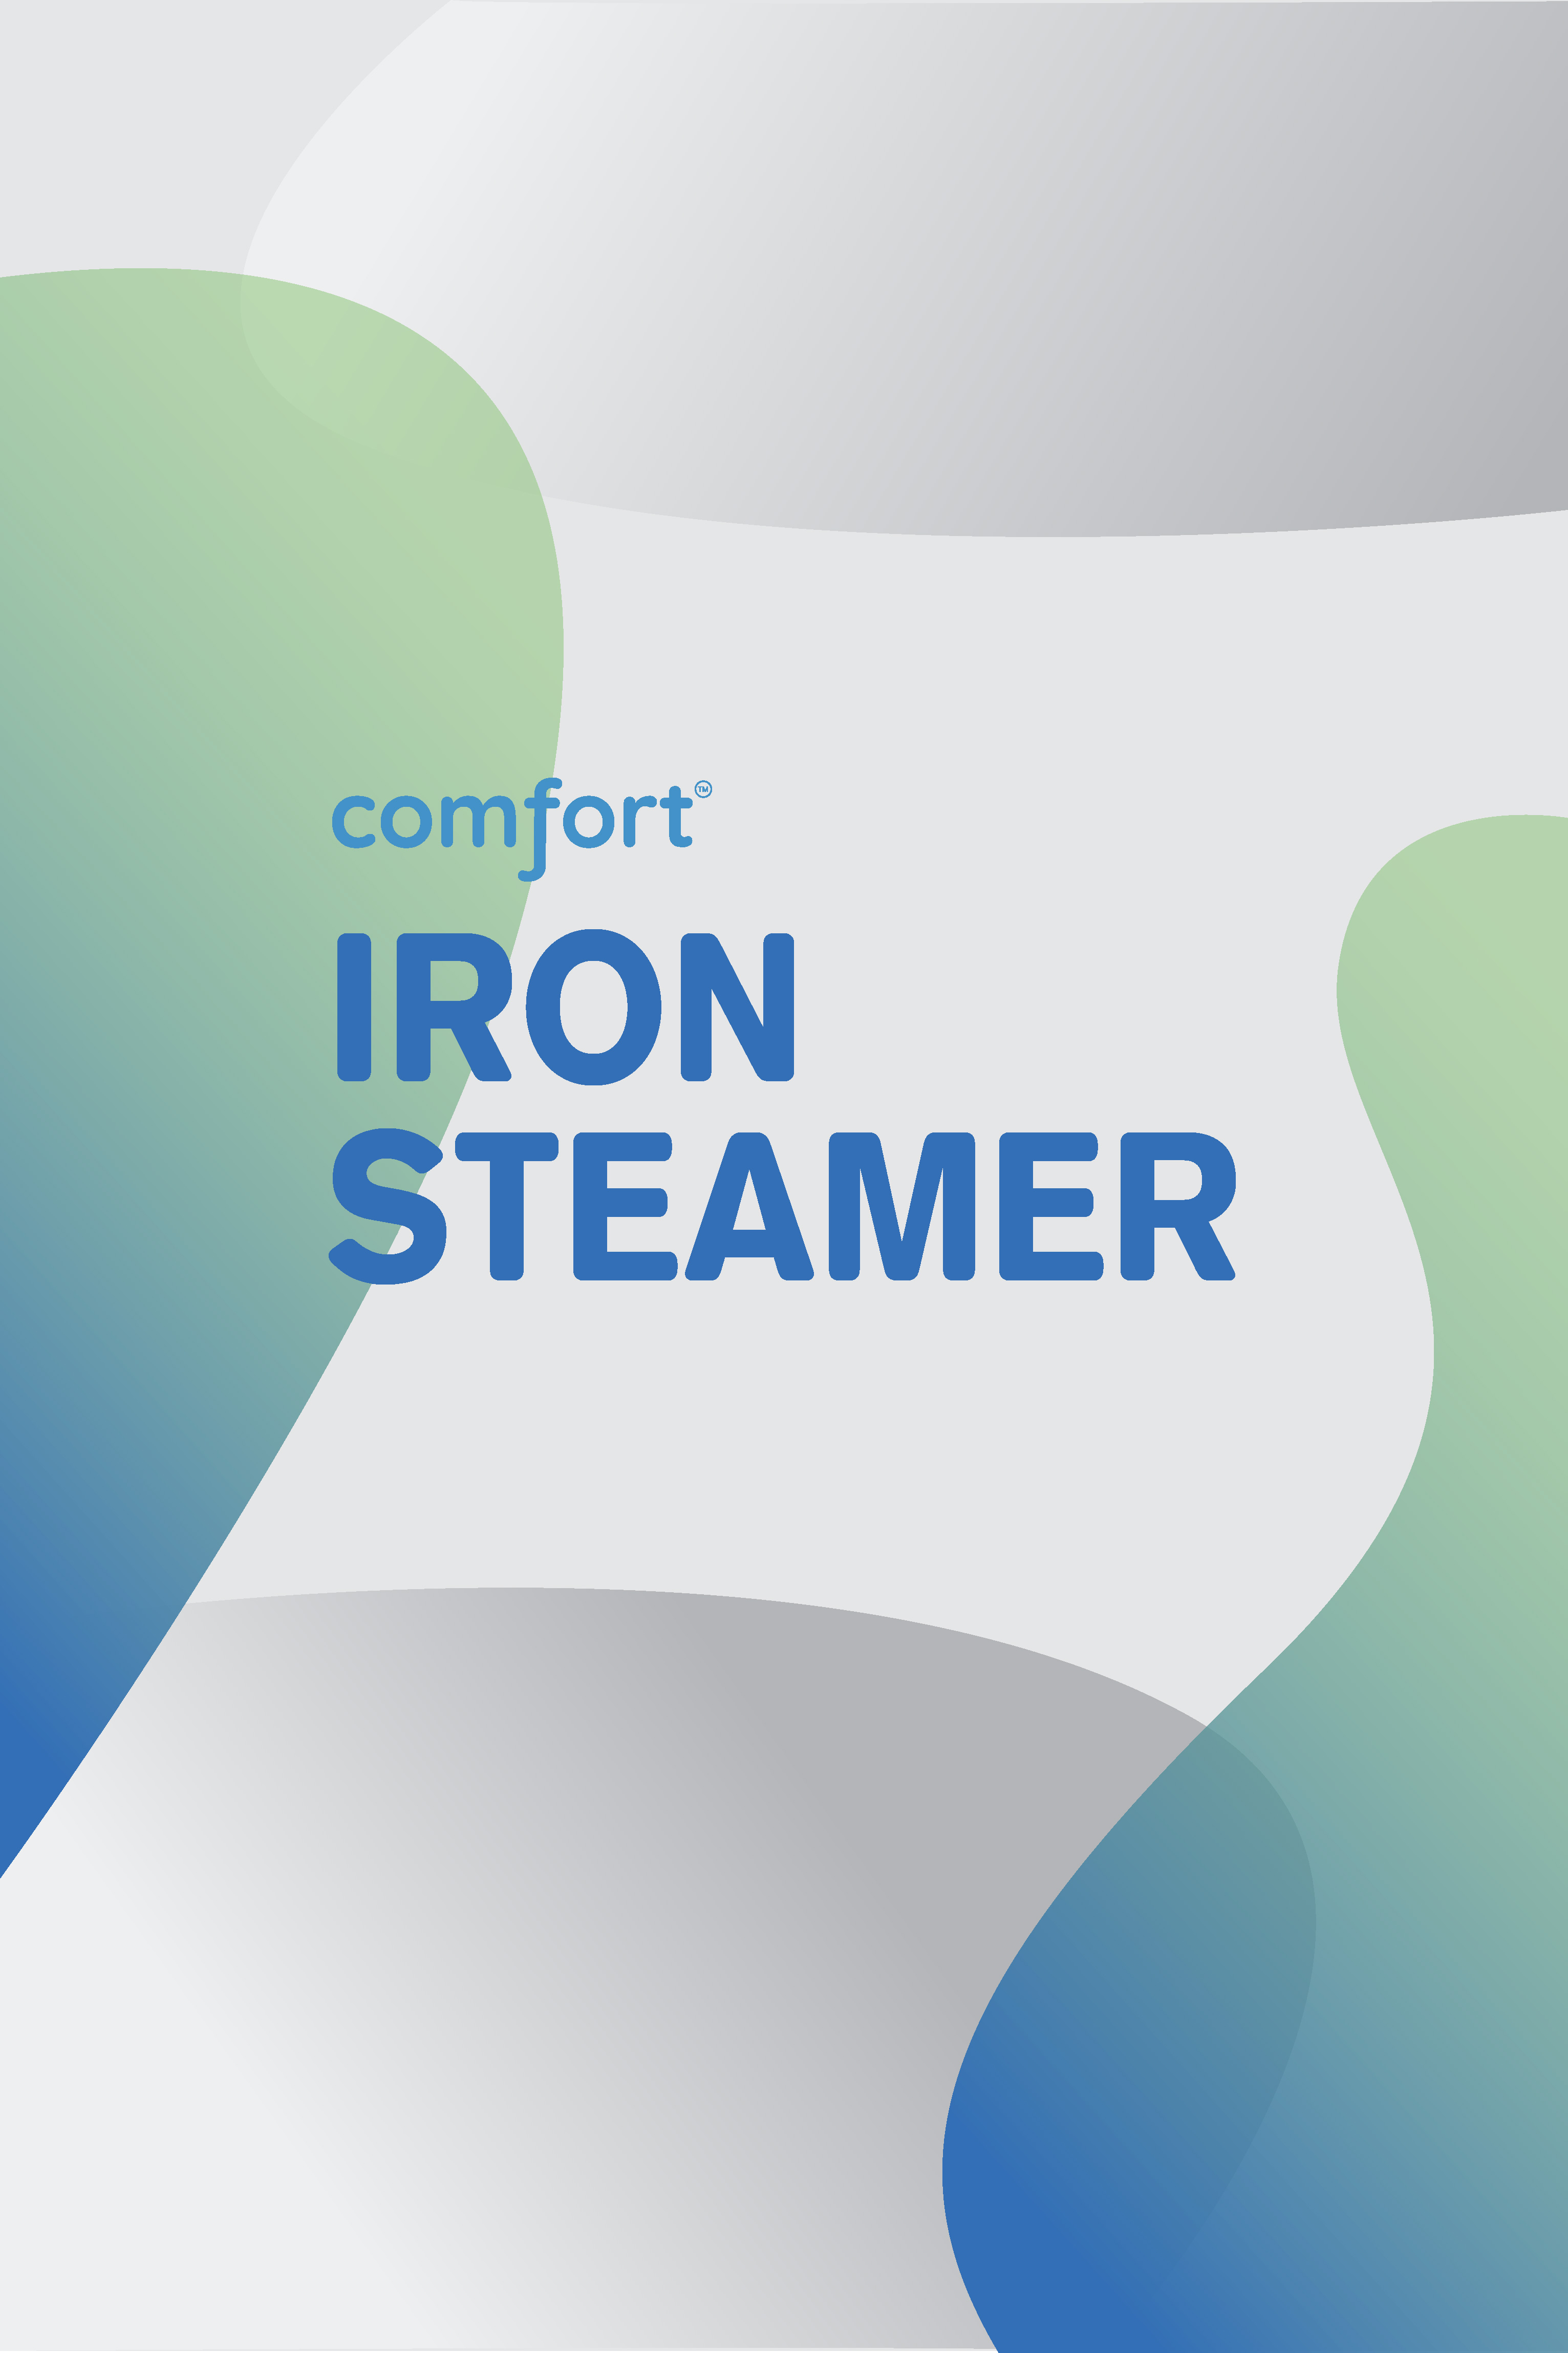 iron steamer brand name